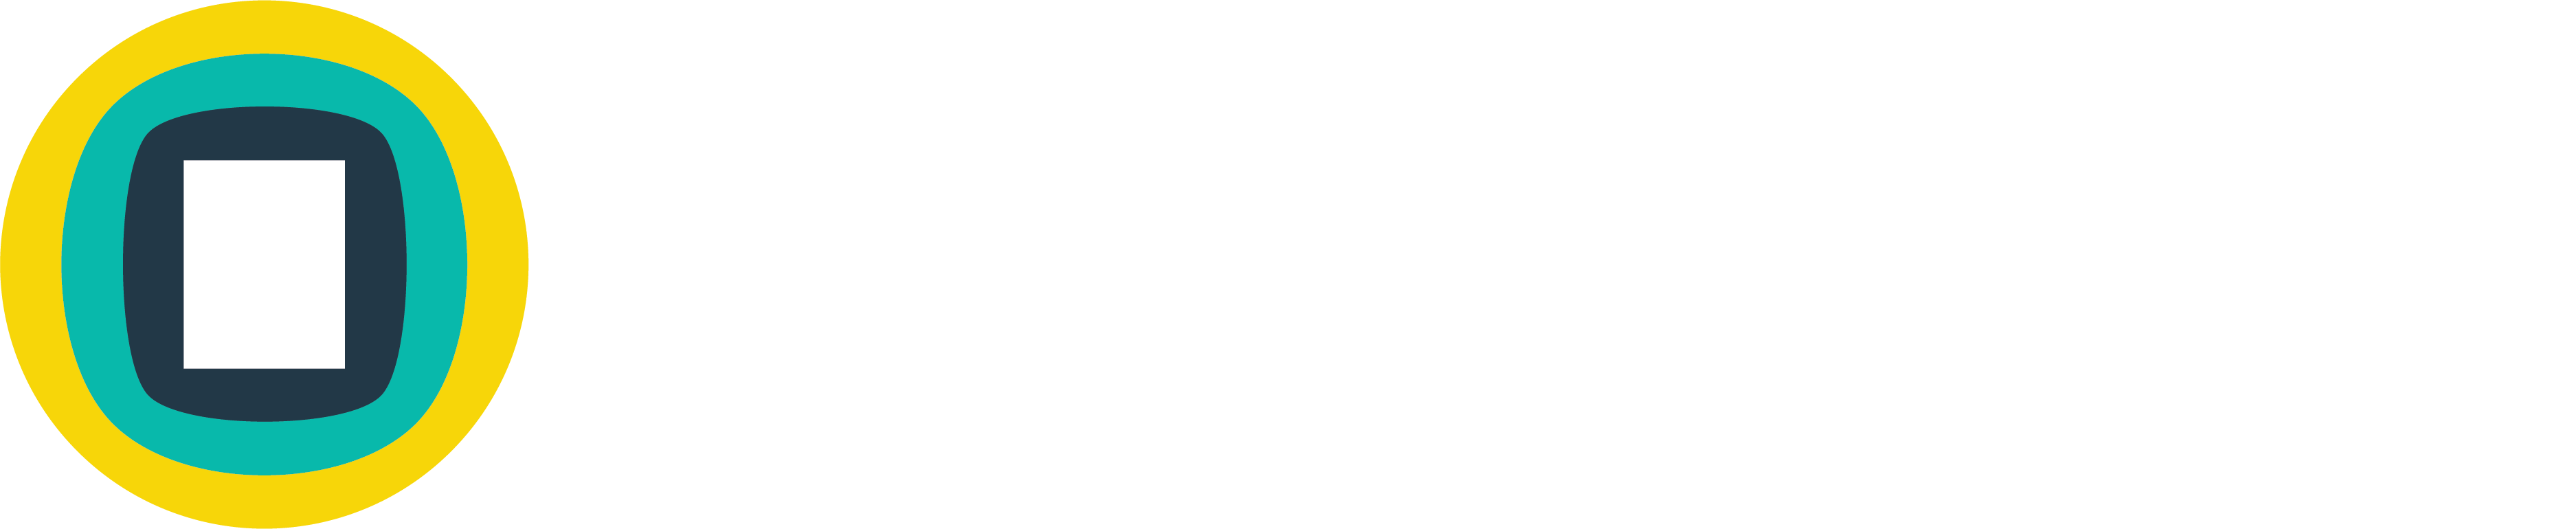 RJY Logo_Full Color Inverted